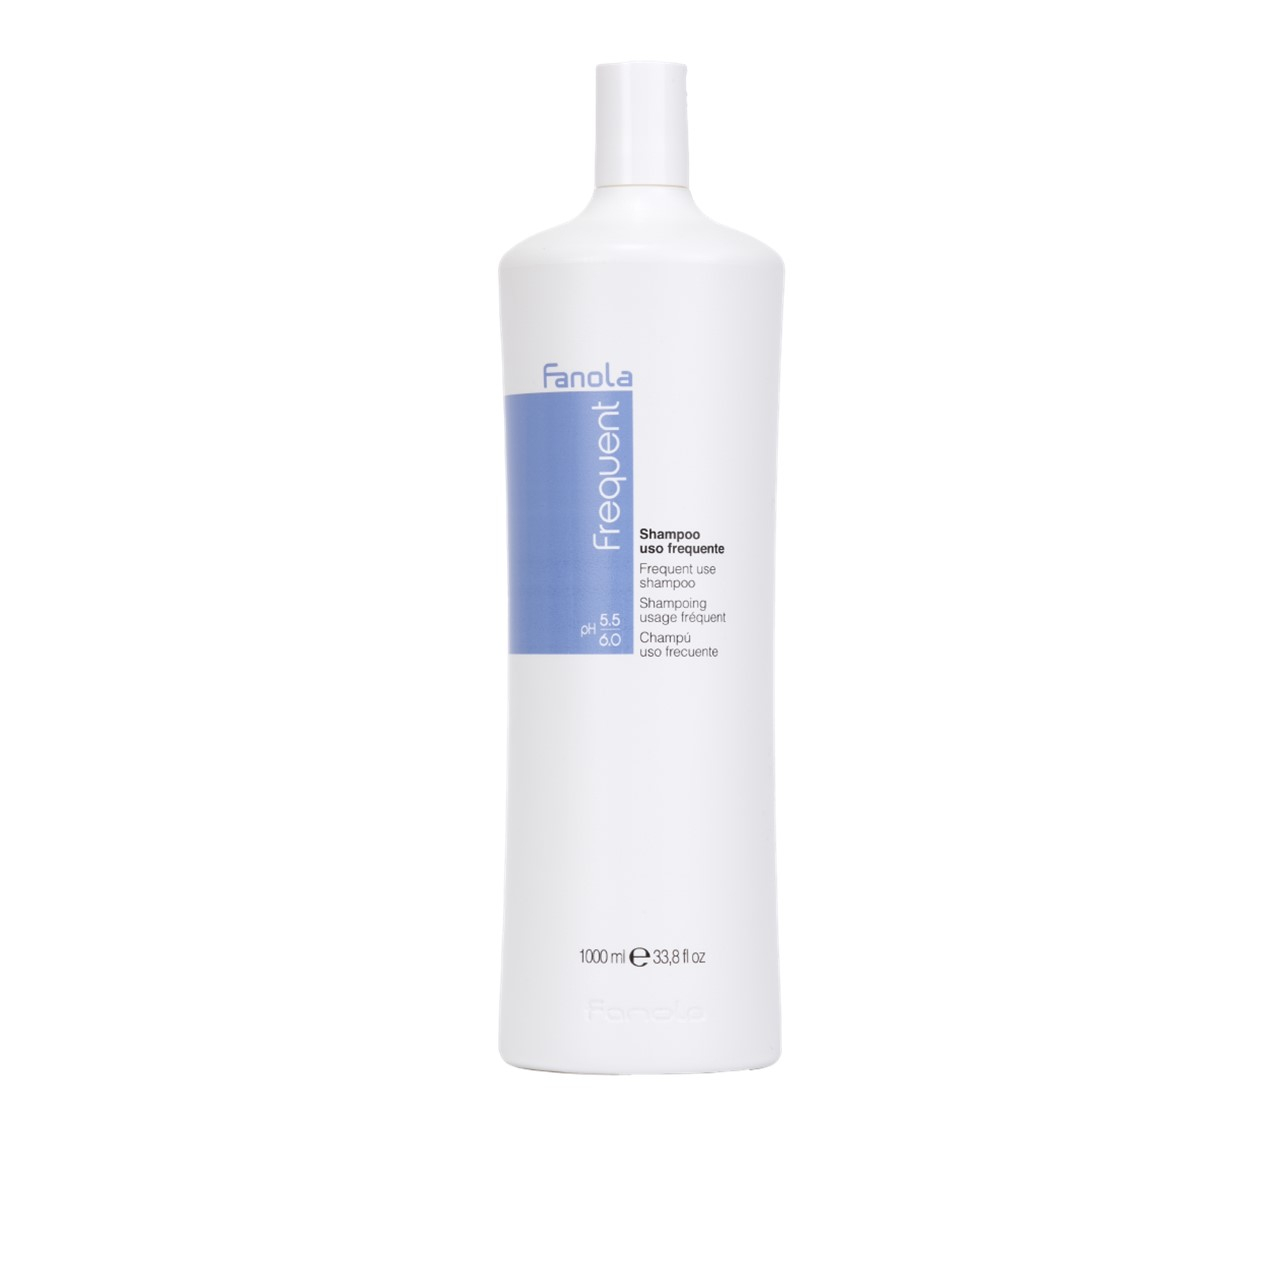 Fanola Frequent Use Shampoo 1L (33.8 fl oz)